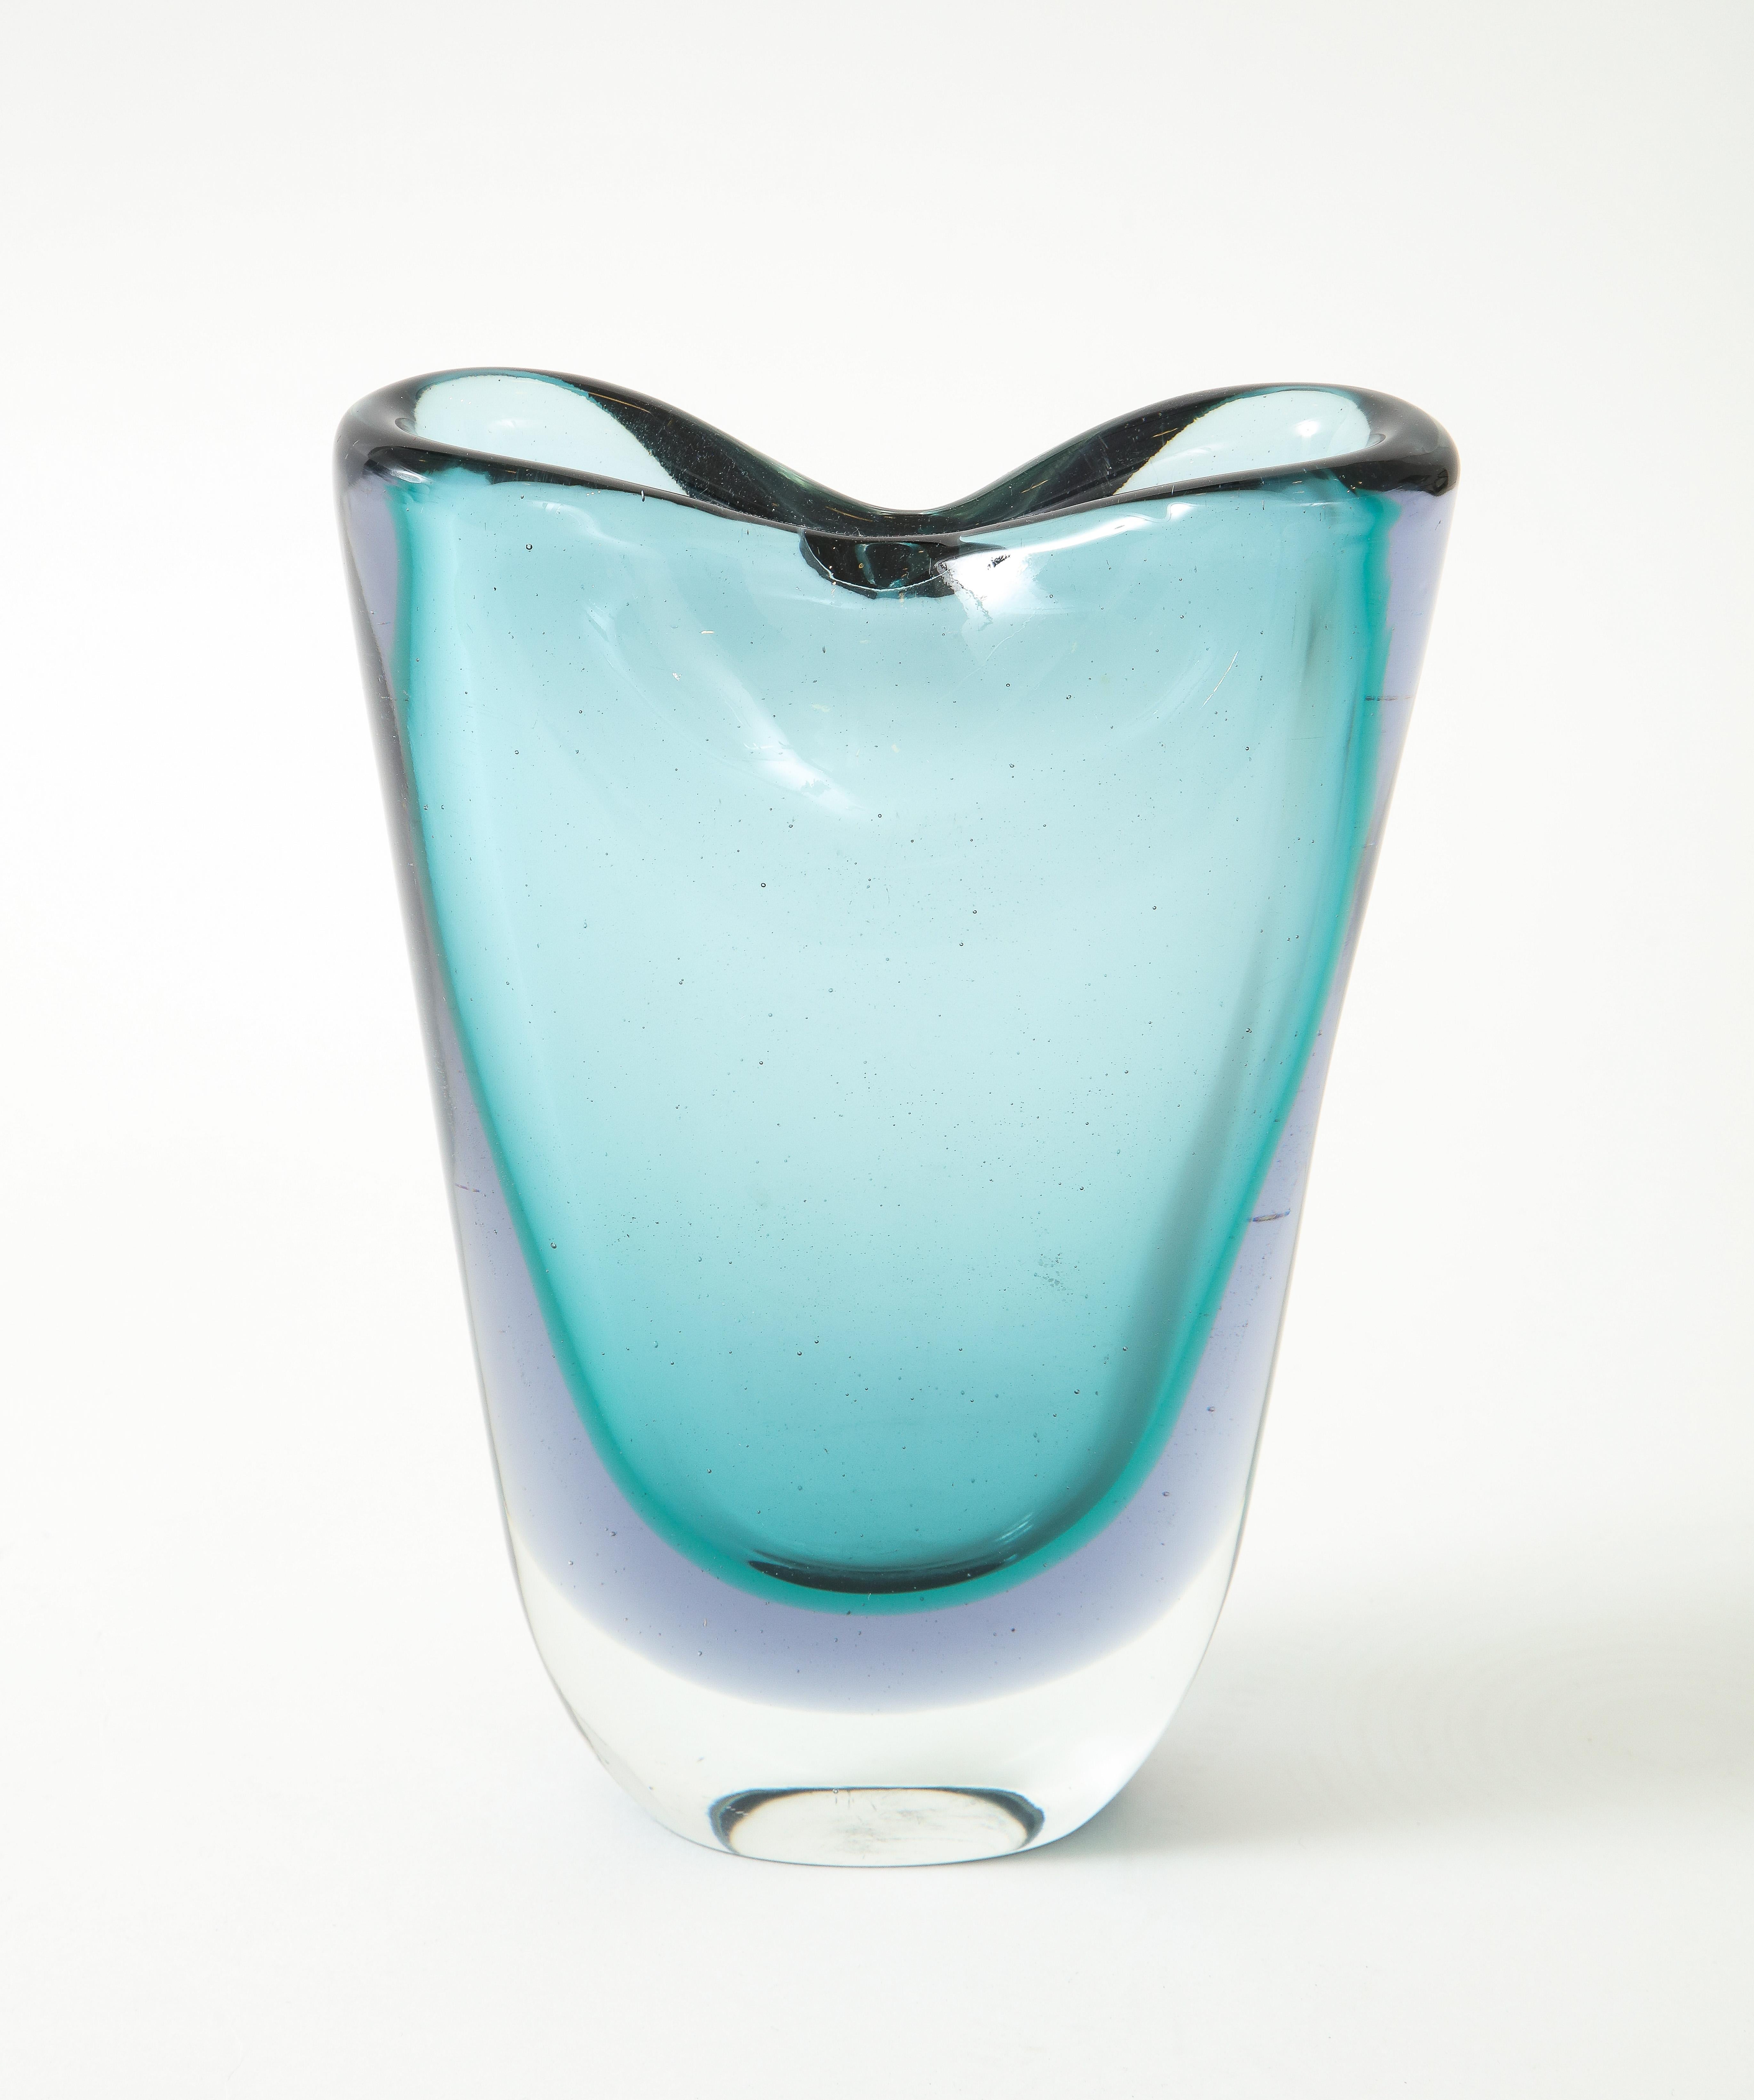 Blown Glass Flavio Poli for Seguso Vetri d'Arte Sommerso Pinched Glass Vase, Italy, 1950s